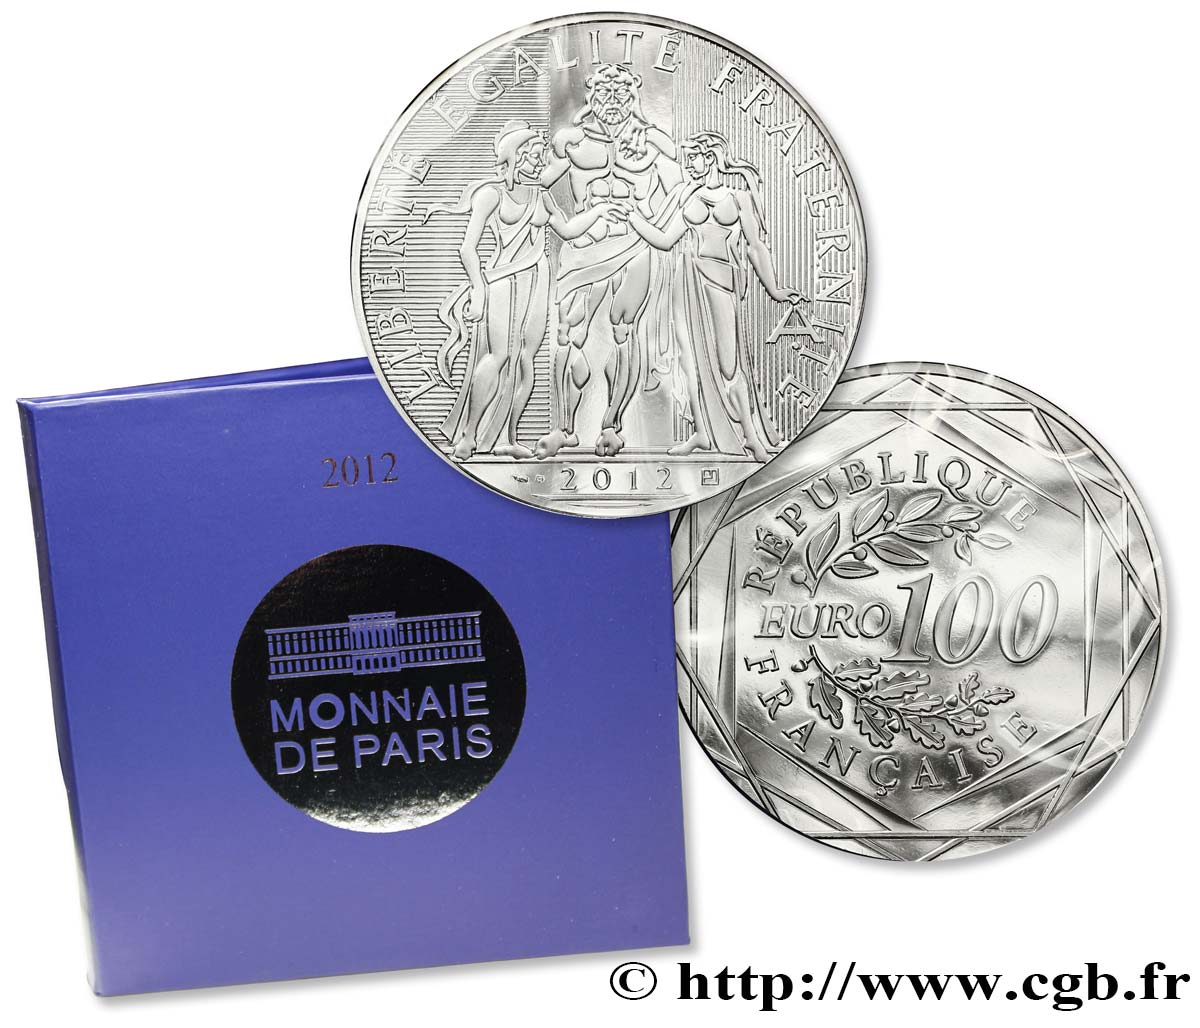 FRANCE 100 Euro HERCULE 2012 MS